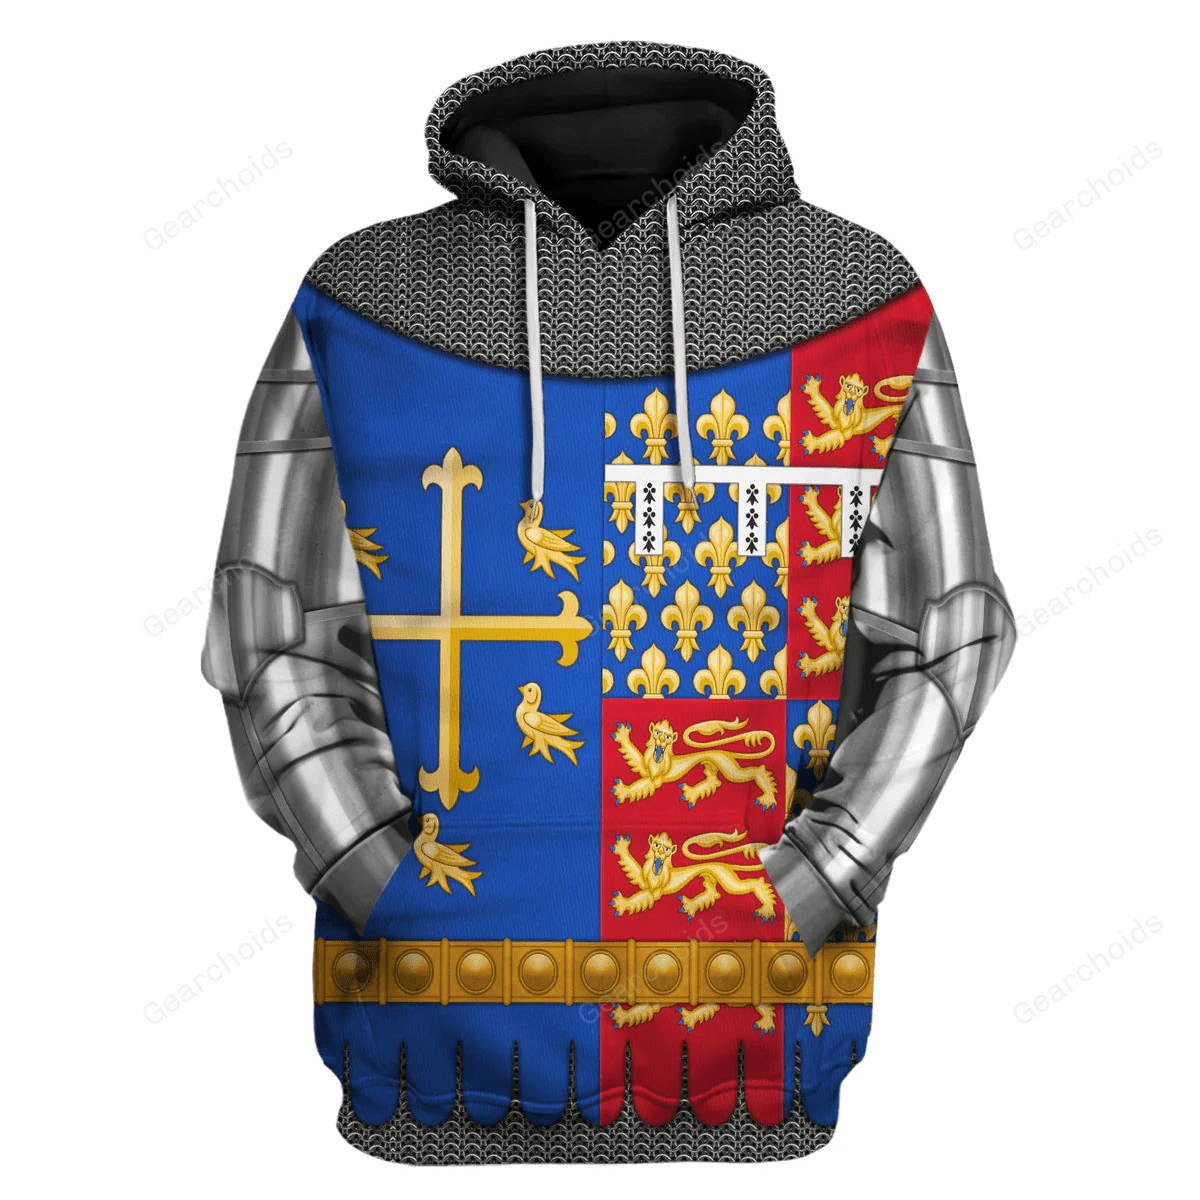 Gearchoids Richard II Of England Amour Knights Costume Hoodie Sweatshirt T-Shirt Tracksuit